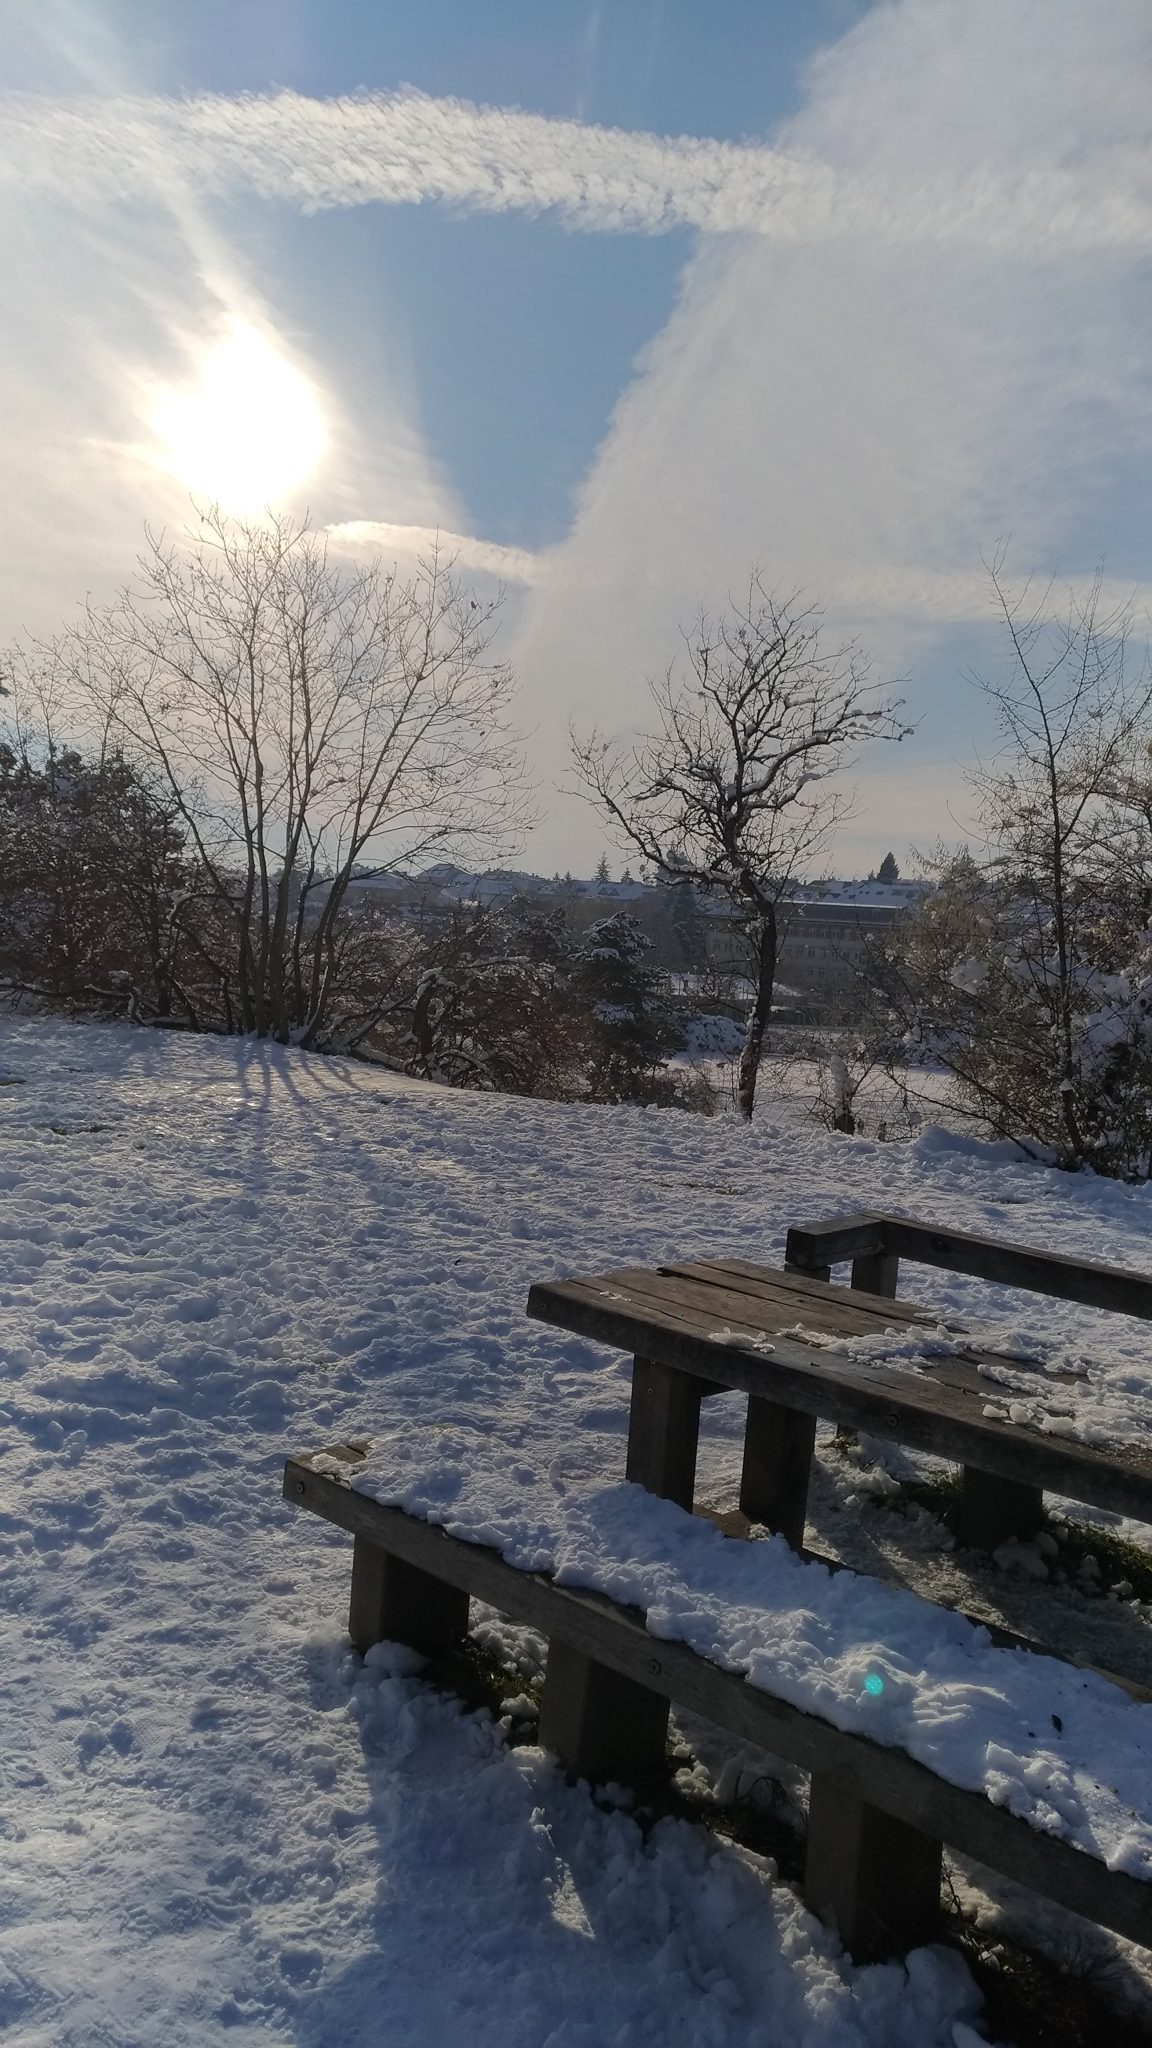 Picnic table in winter